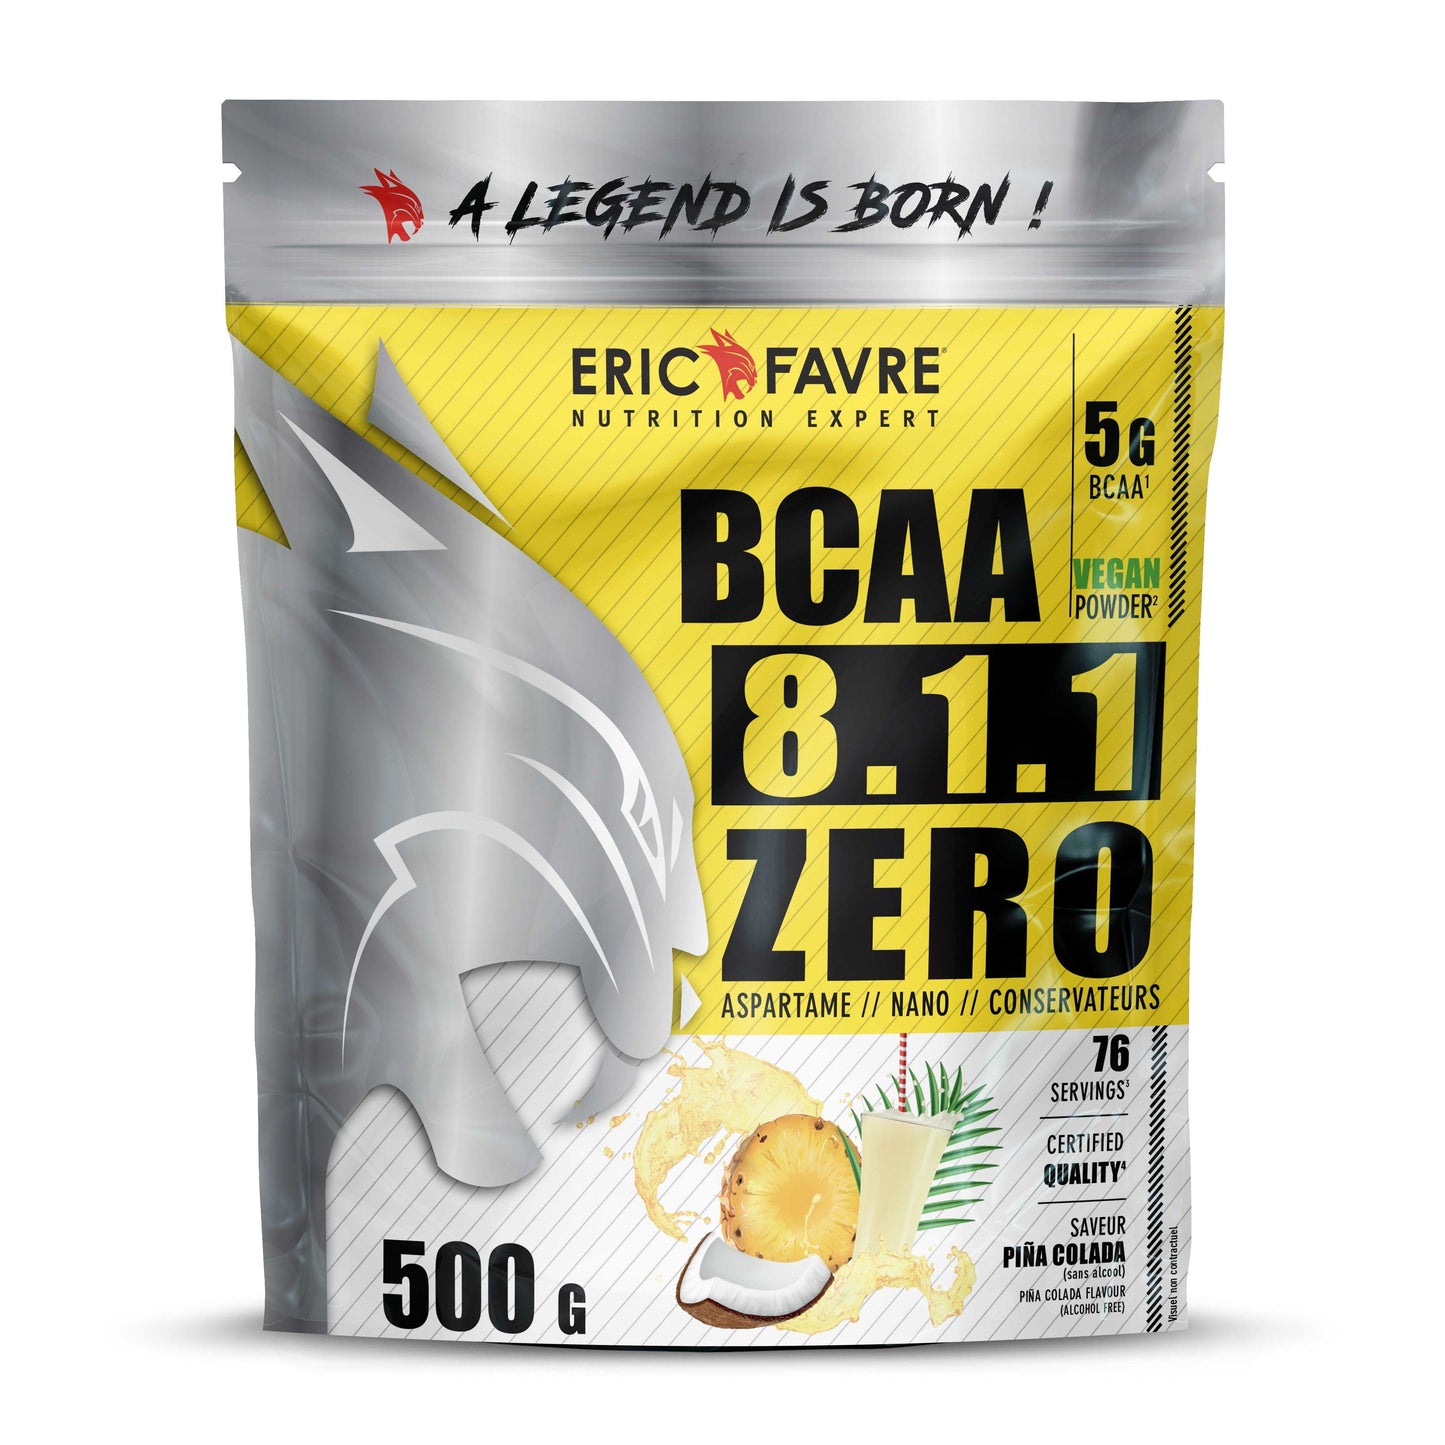 BCAA 8.1.1 Zero 500g / Piña Colada - ERIC FAVRE - Market Fit